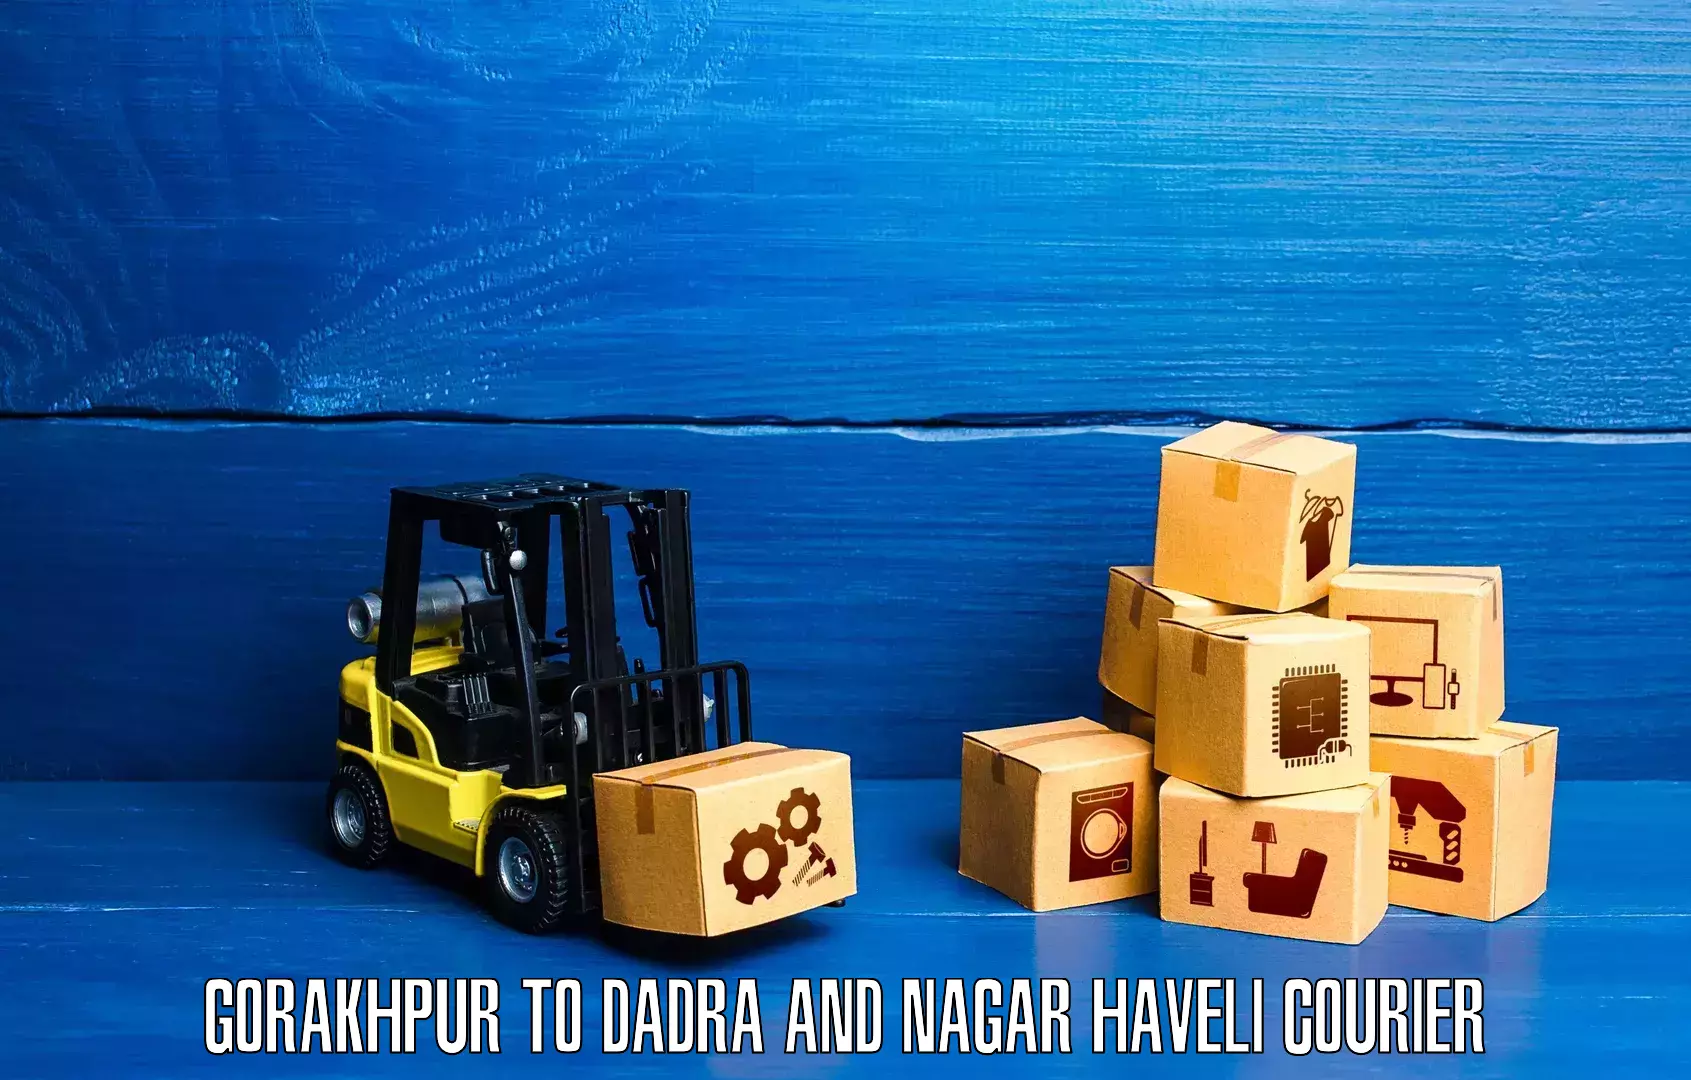 Nationwide delivery network Gorakhpur to Dadra and Nagar Haveli